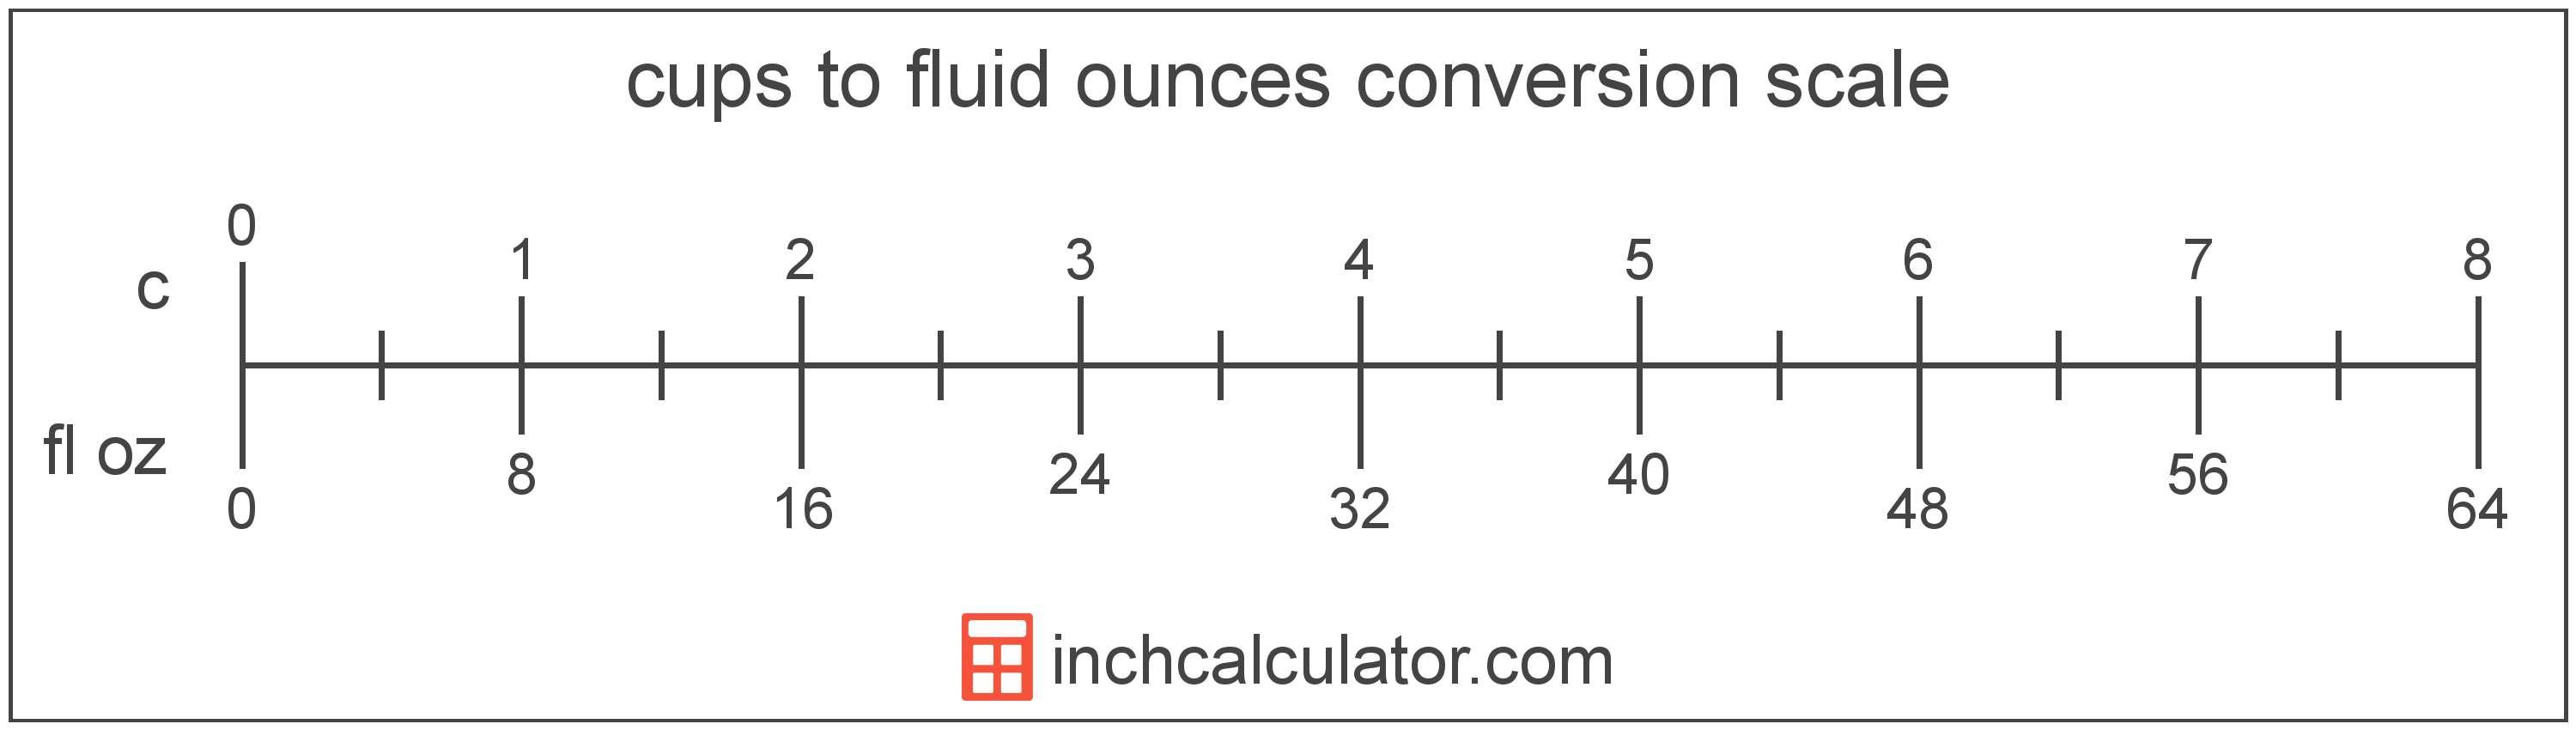 convert-fluid-ounces-to-cups-fl-oz-to-c